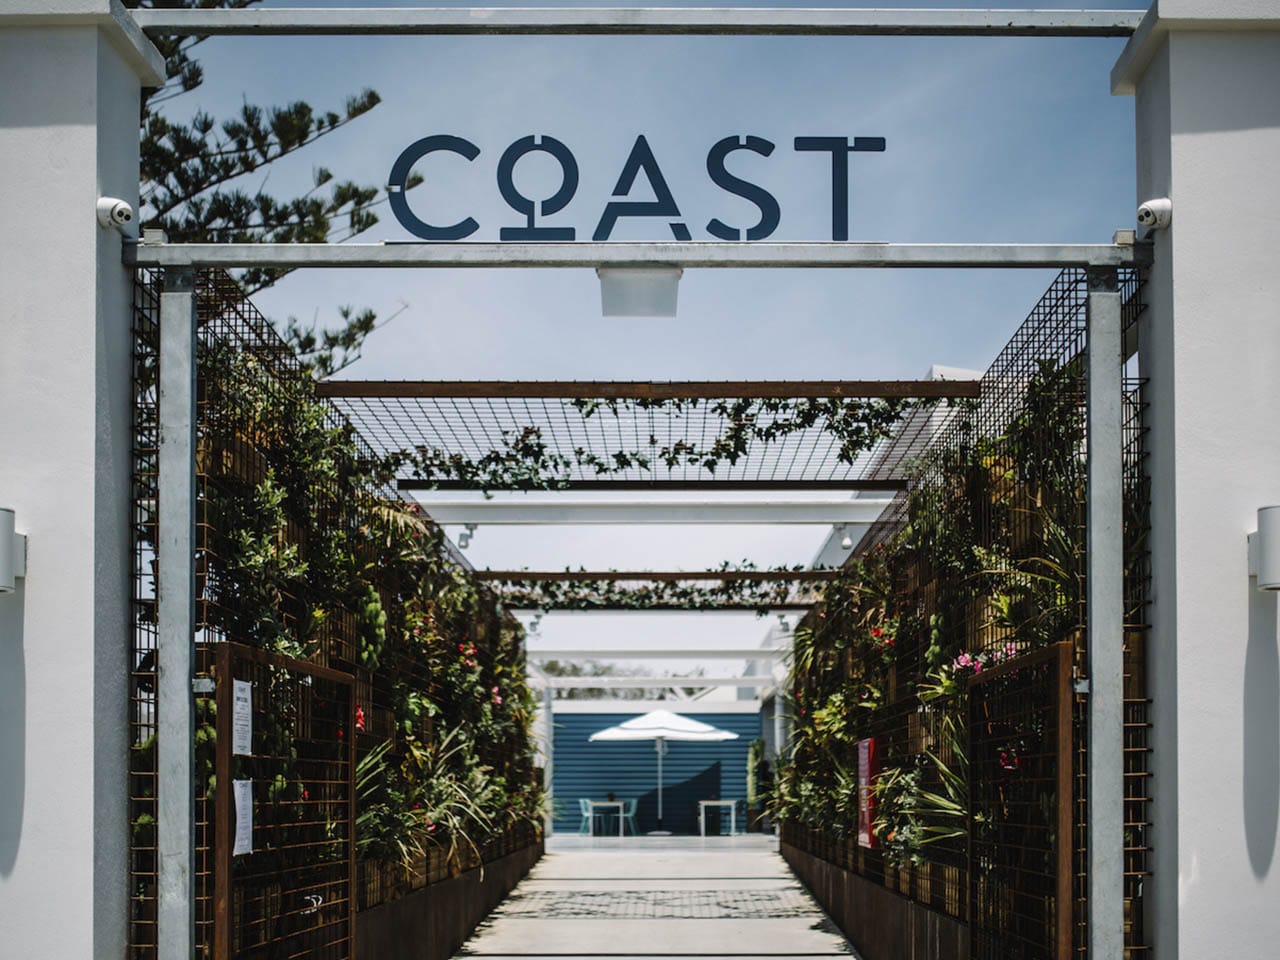 The Entrance Sign For The Coast Port Beach.